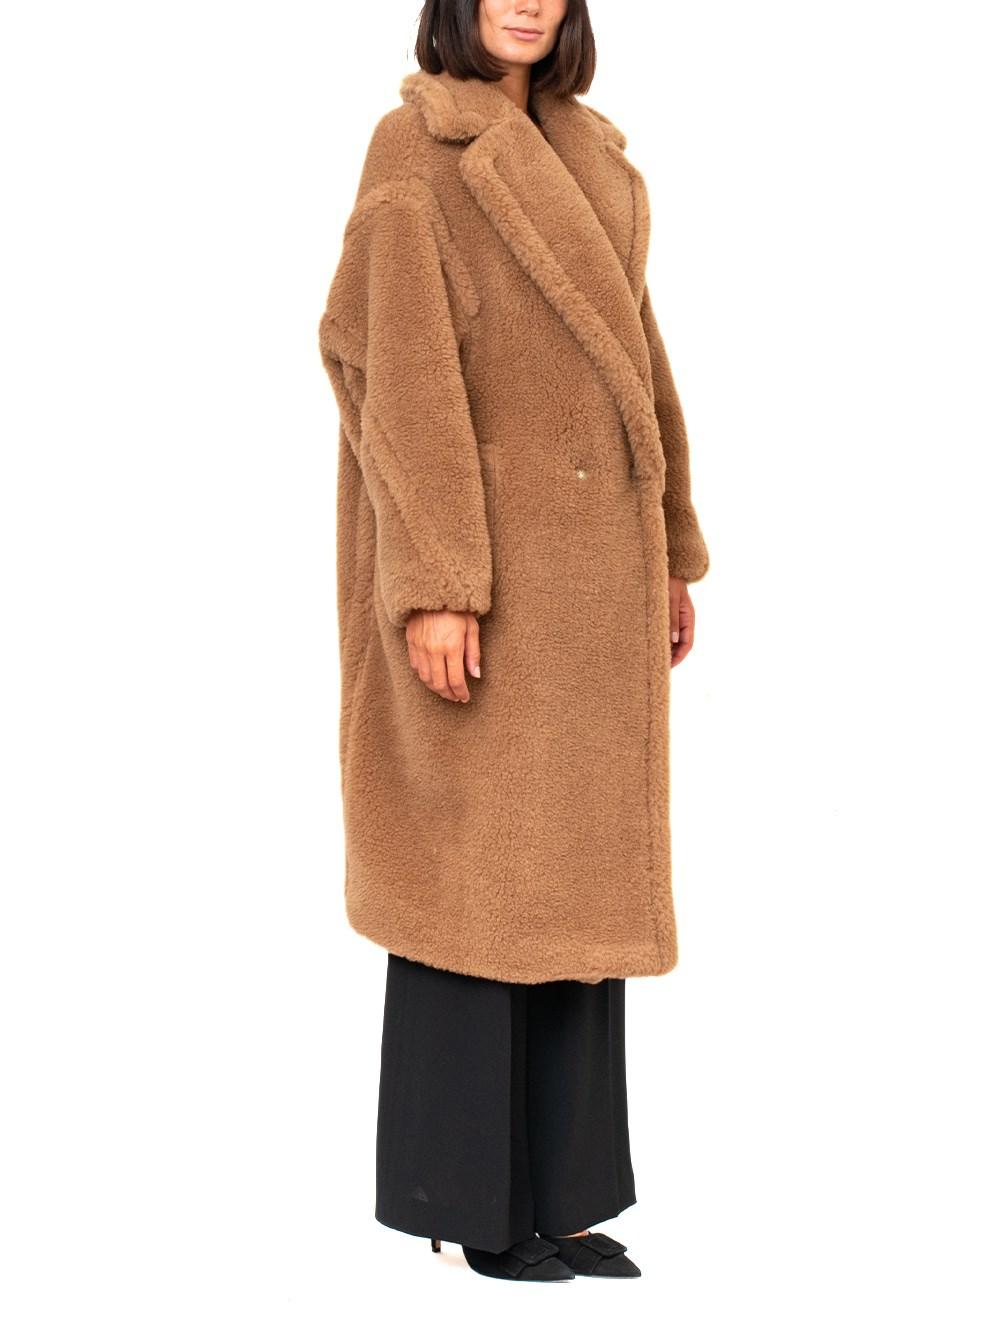 Max Mara Fur Tan Alpaca Blend Oversized Teddy Coat S in Camel (Brown) -  Save 55% - Lyst